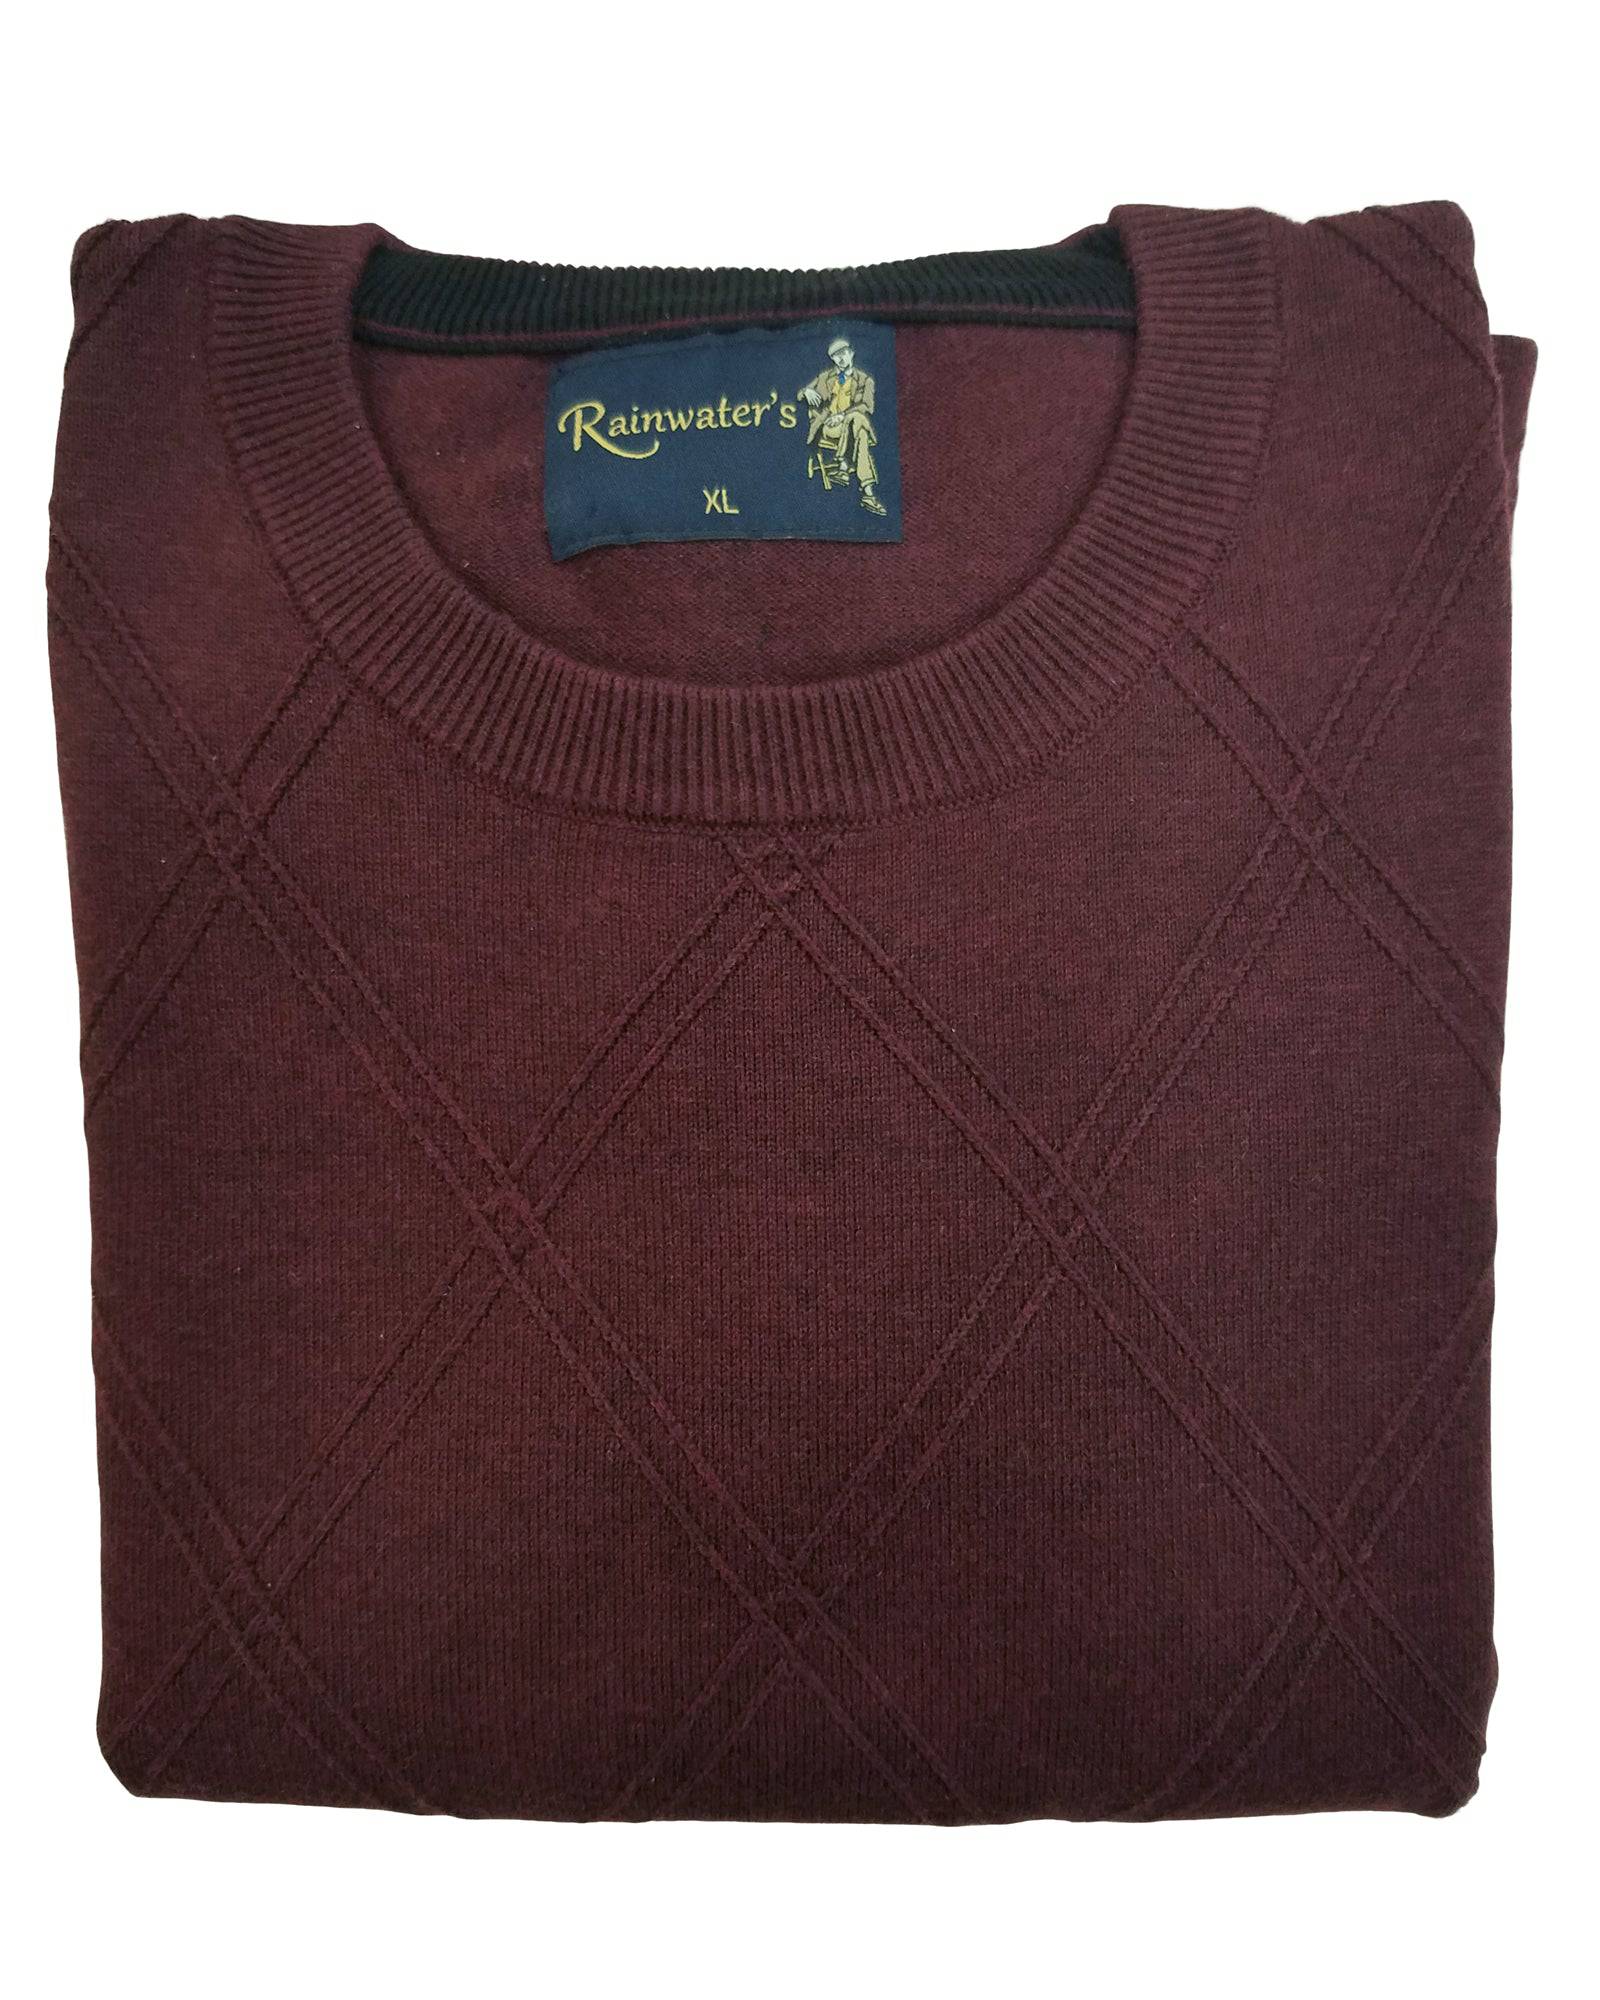 Crew Neck Sweater in Deep Burgundy Diamond Weave Cotton Blend - Rainwater's Men's Clothing and Tuxedo Rental